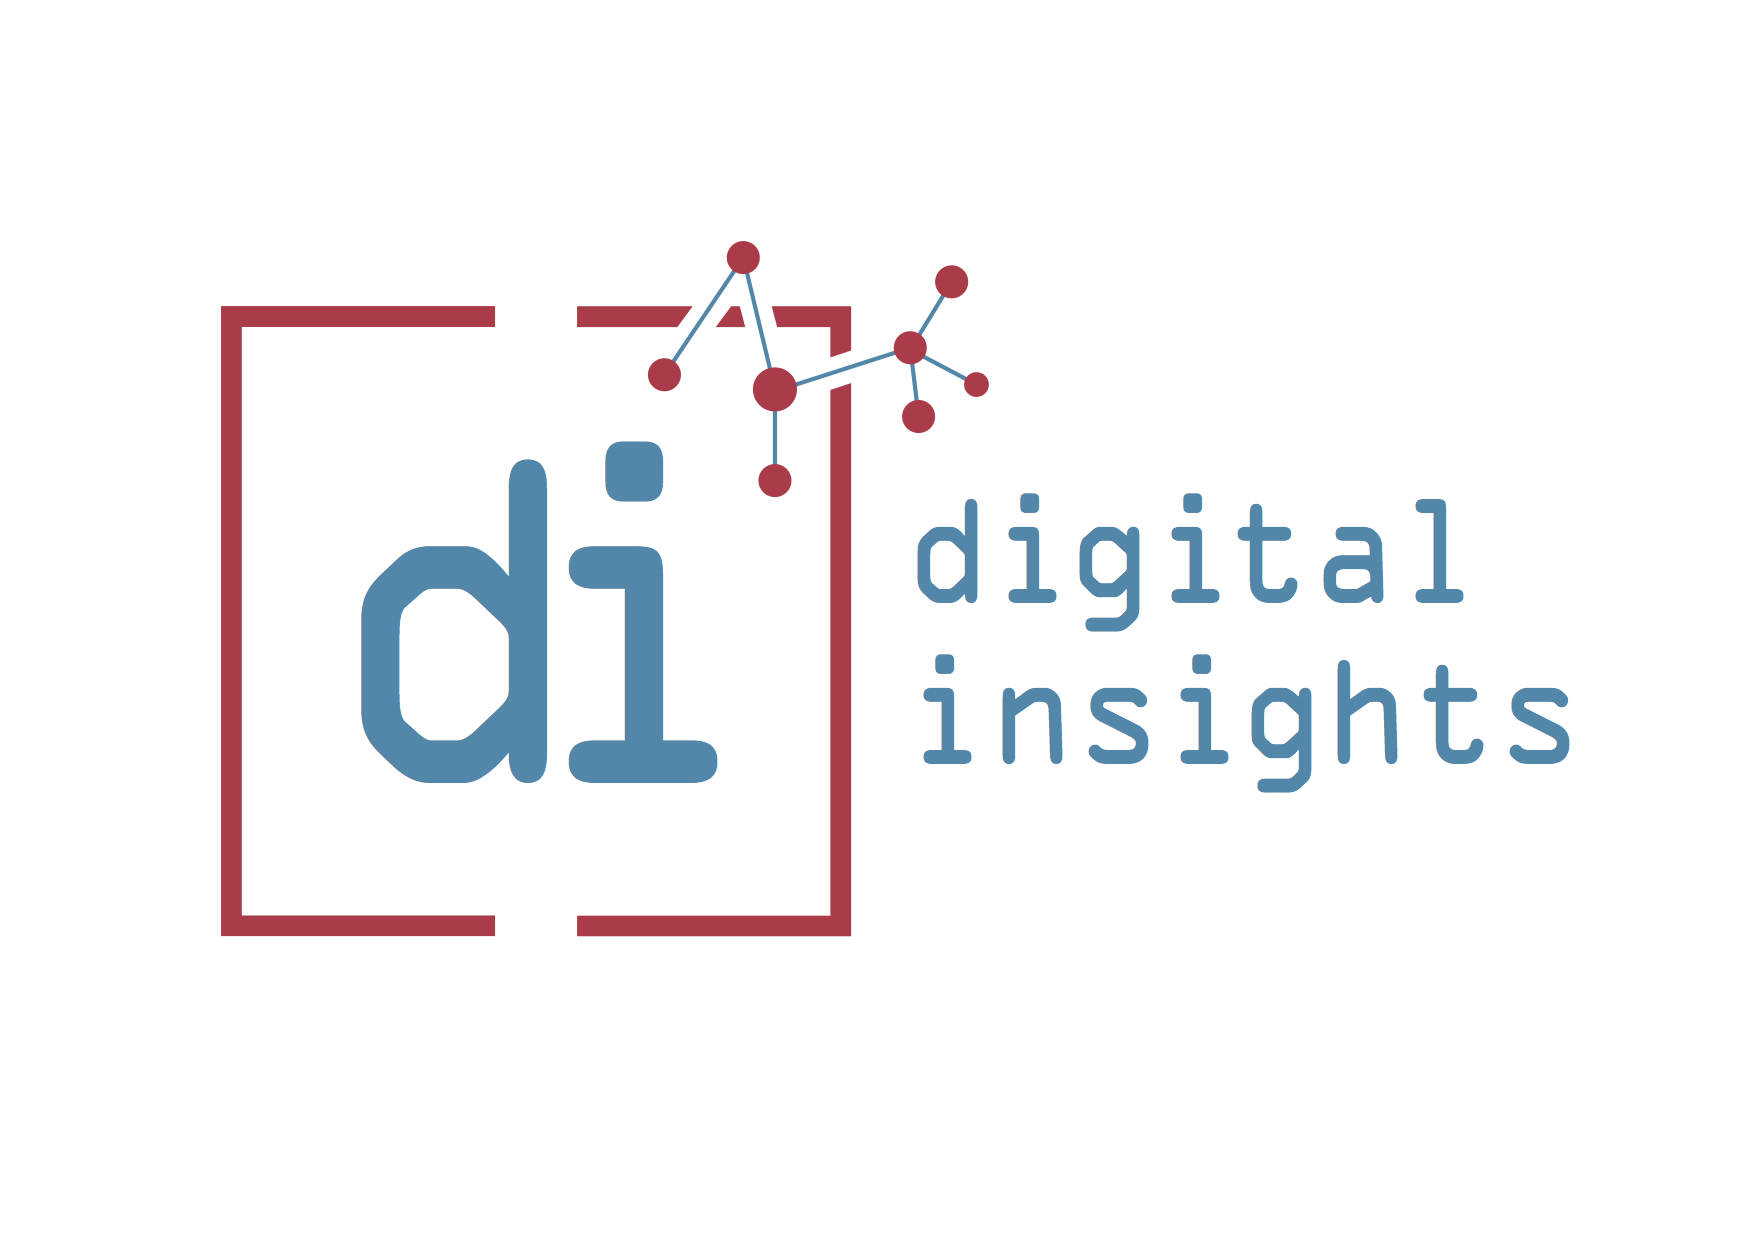 (c) Digital-insights.co.uk